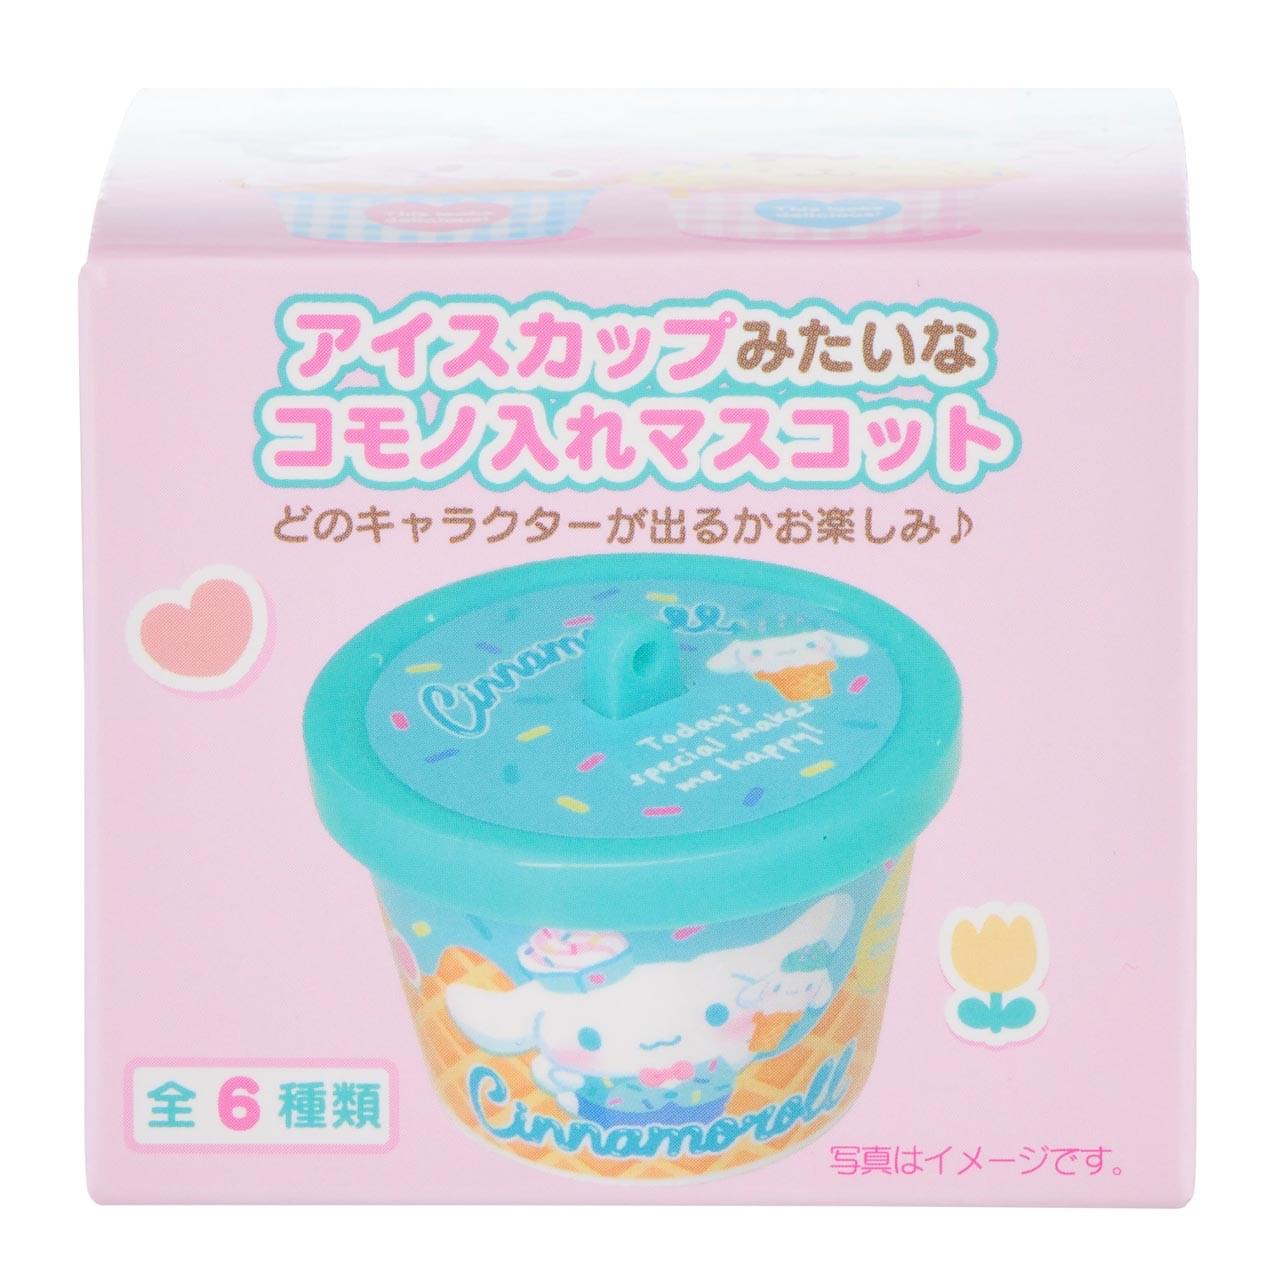 Sanrio Characters Secret Ice Cream Charm | One Random